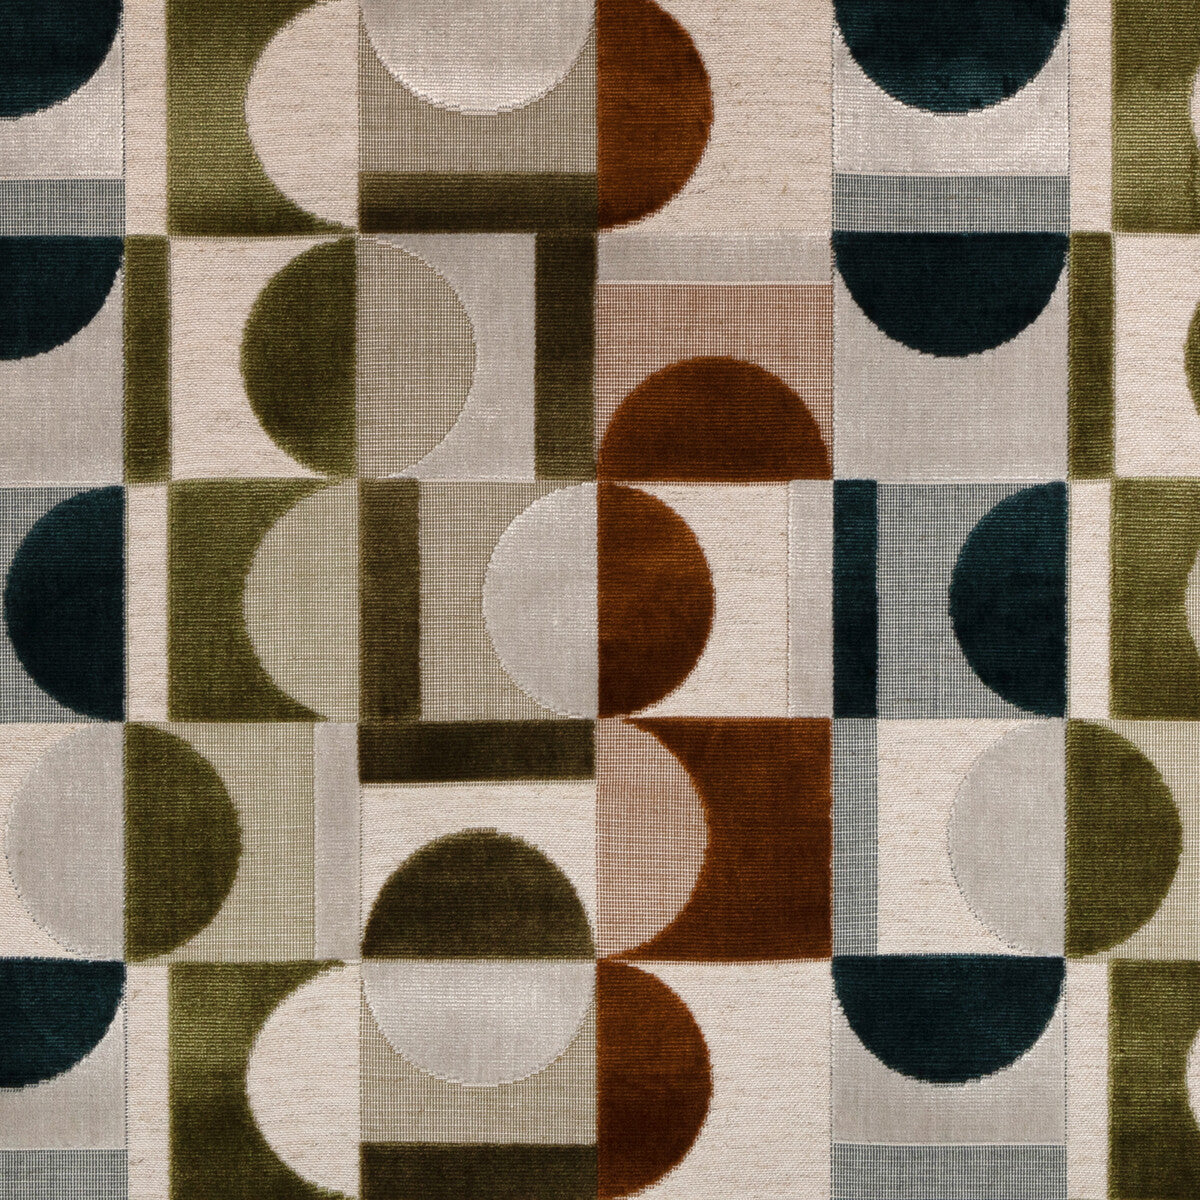 Kravet Design fabric in 36990-324 color - pattern 36990.324.0 - by Kravet Design in the Modern Velvets collection